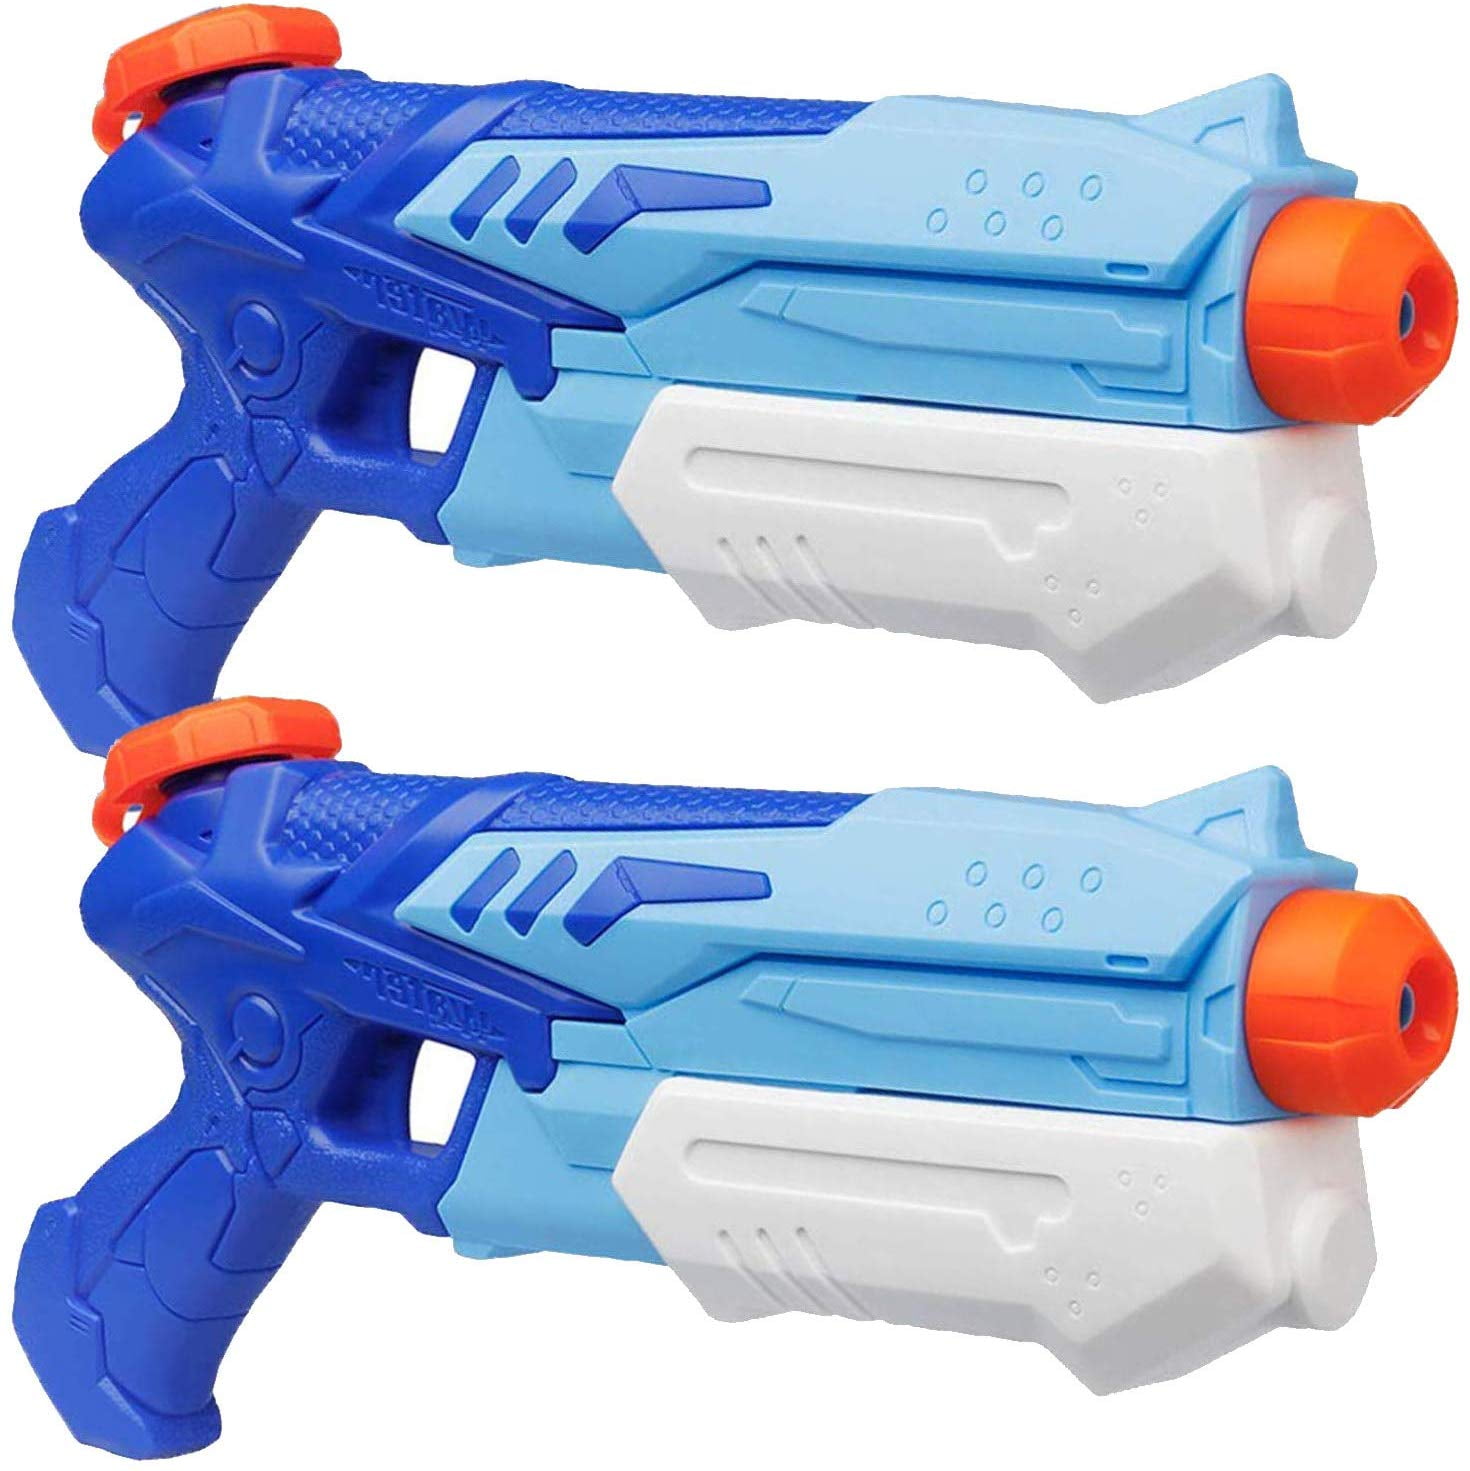 Details about   1Pc Hot sale summer water squirt toy children beach water gun pistol tI*ss 